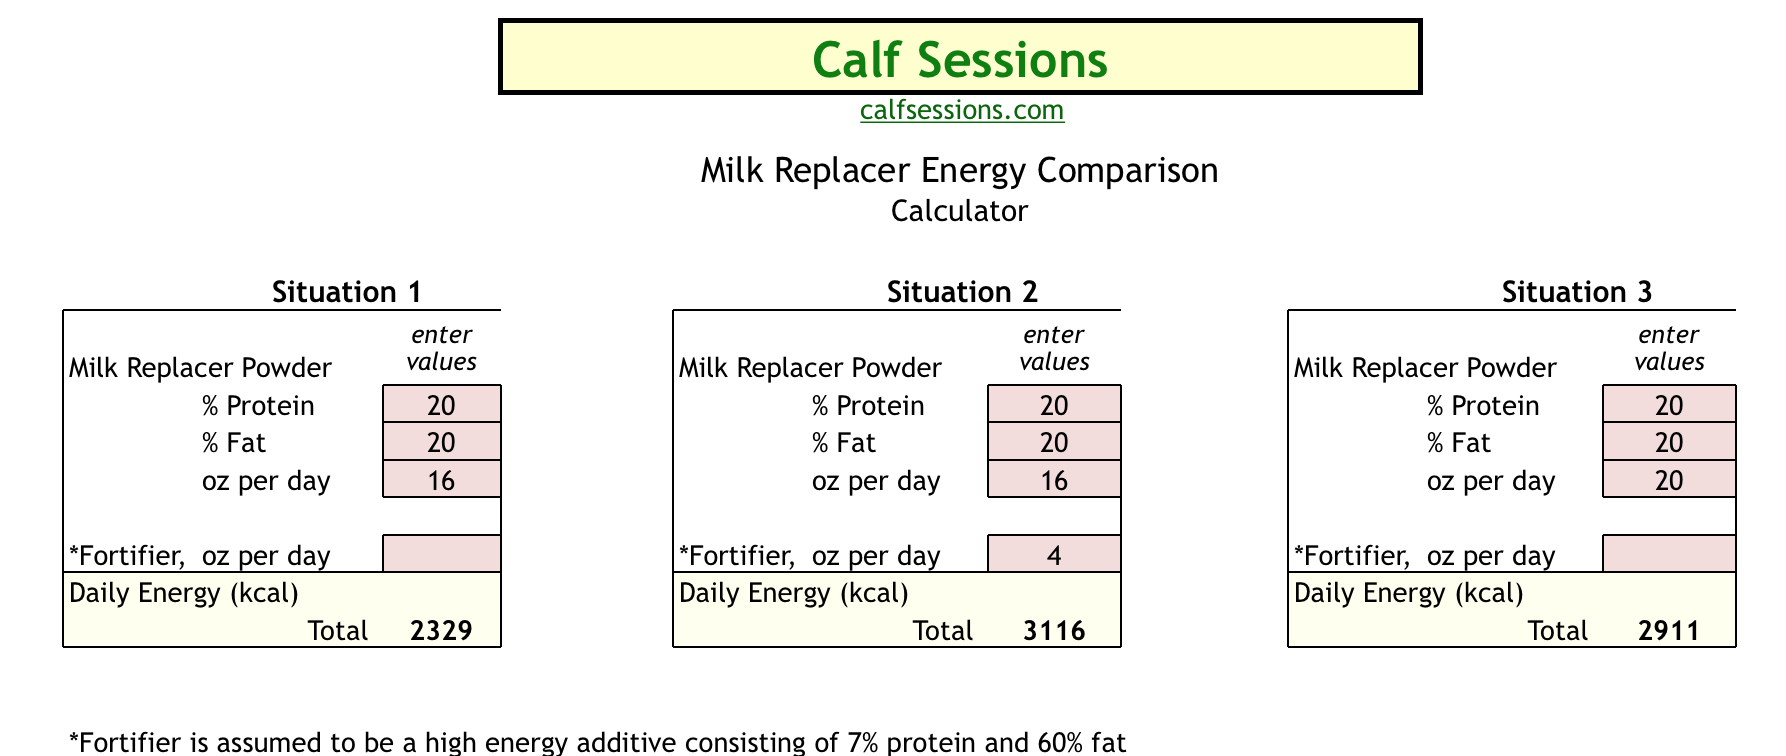 Milk Replacer Energy Comparison Calculator to Estimate Energy Intake